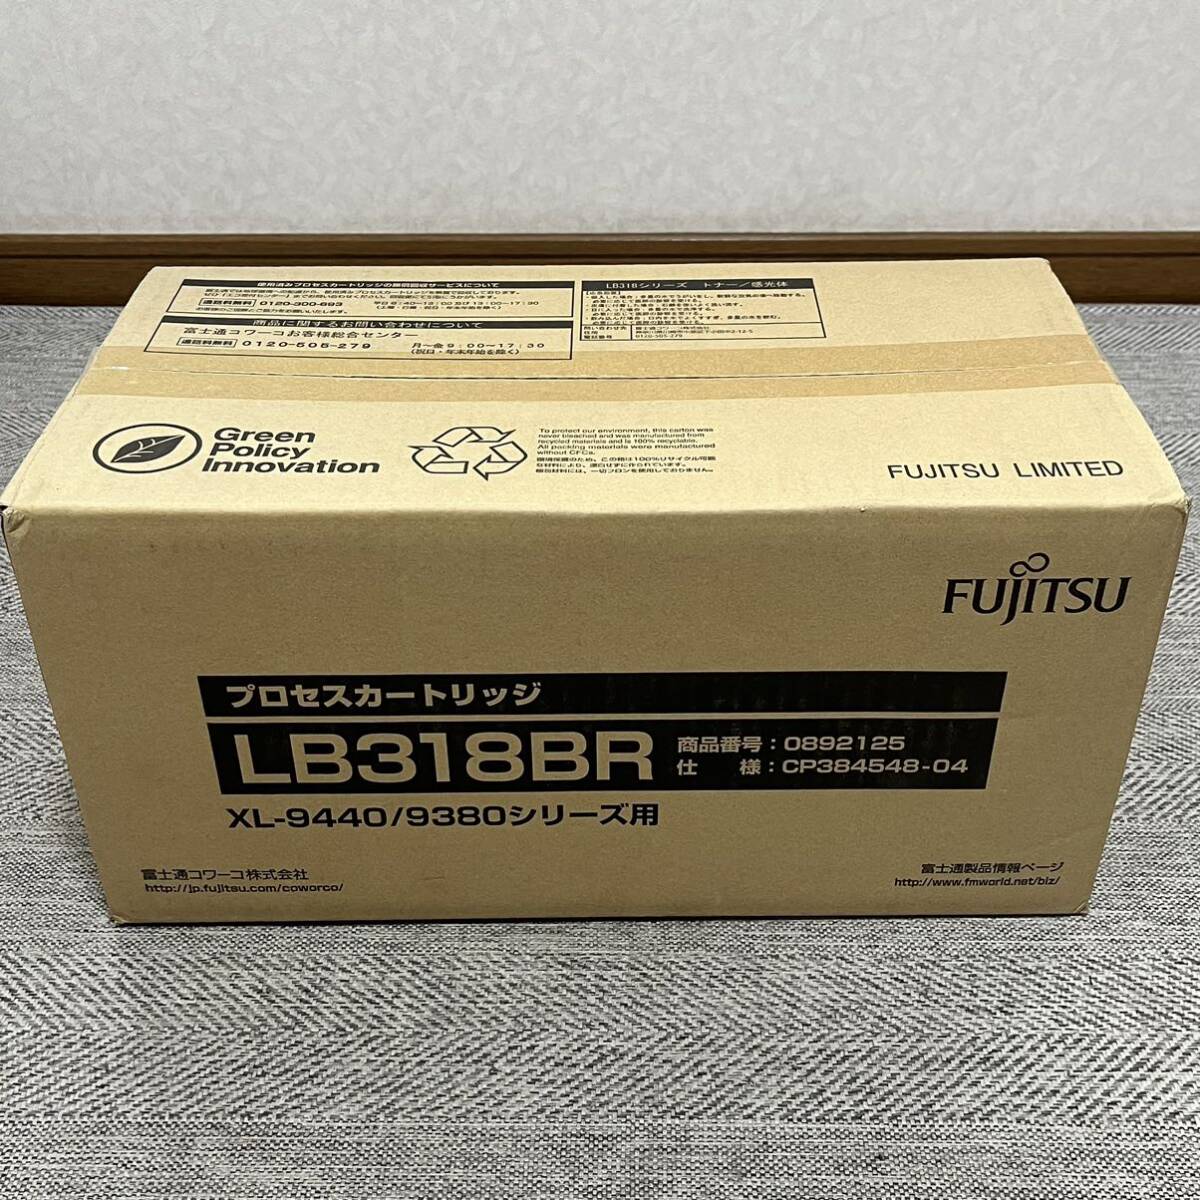  unopened have efficacy time limit 24.09 FUJITSU Fujitsu process cartridge lb LB318BR storage goods 